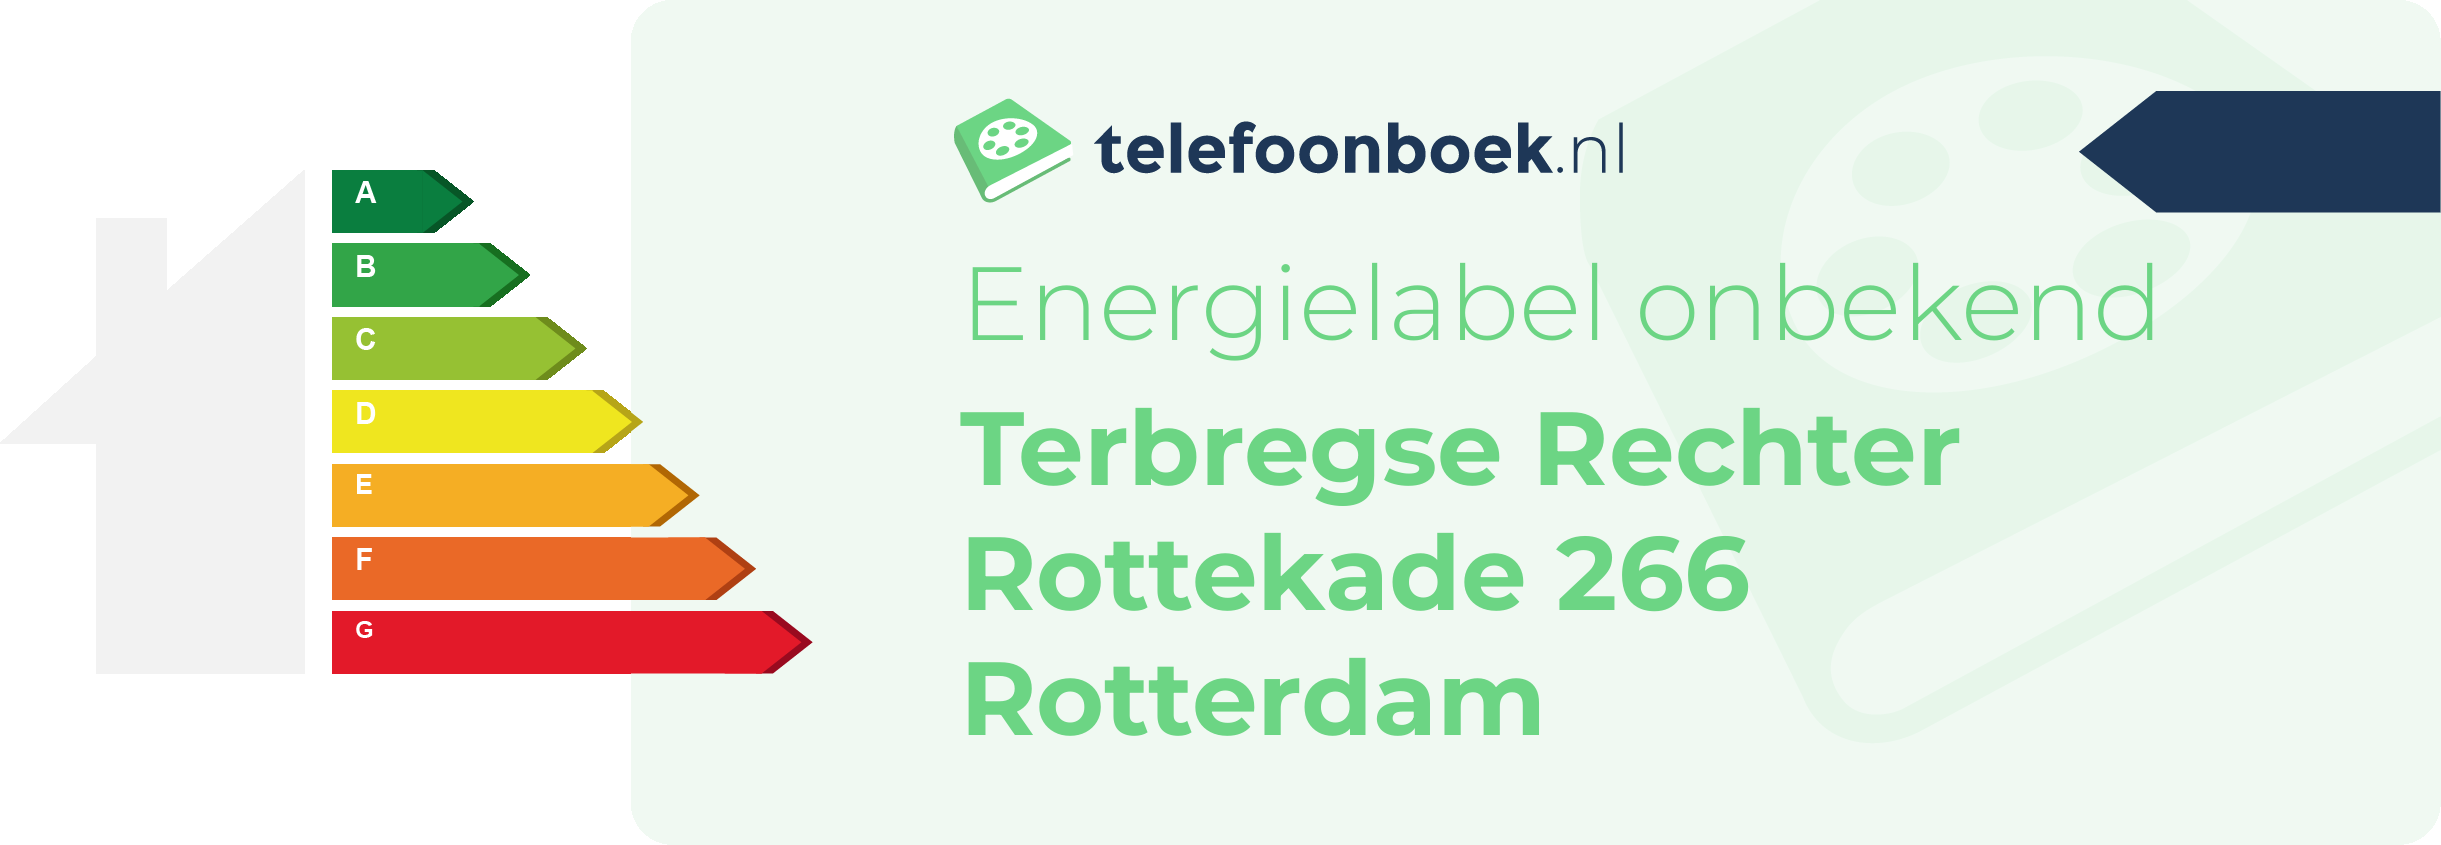 Energielabel Terbregse Rechter Rottekade 266 Rotterdam